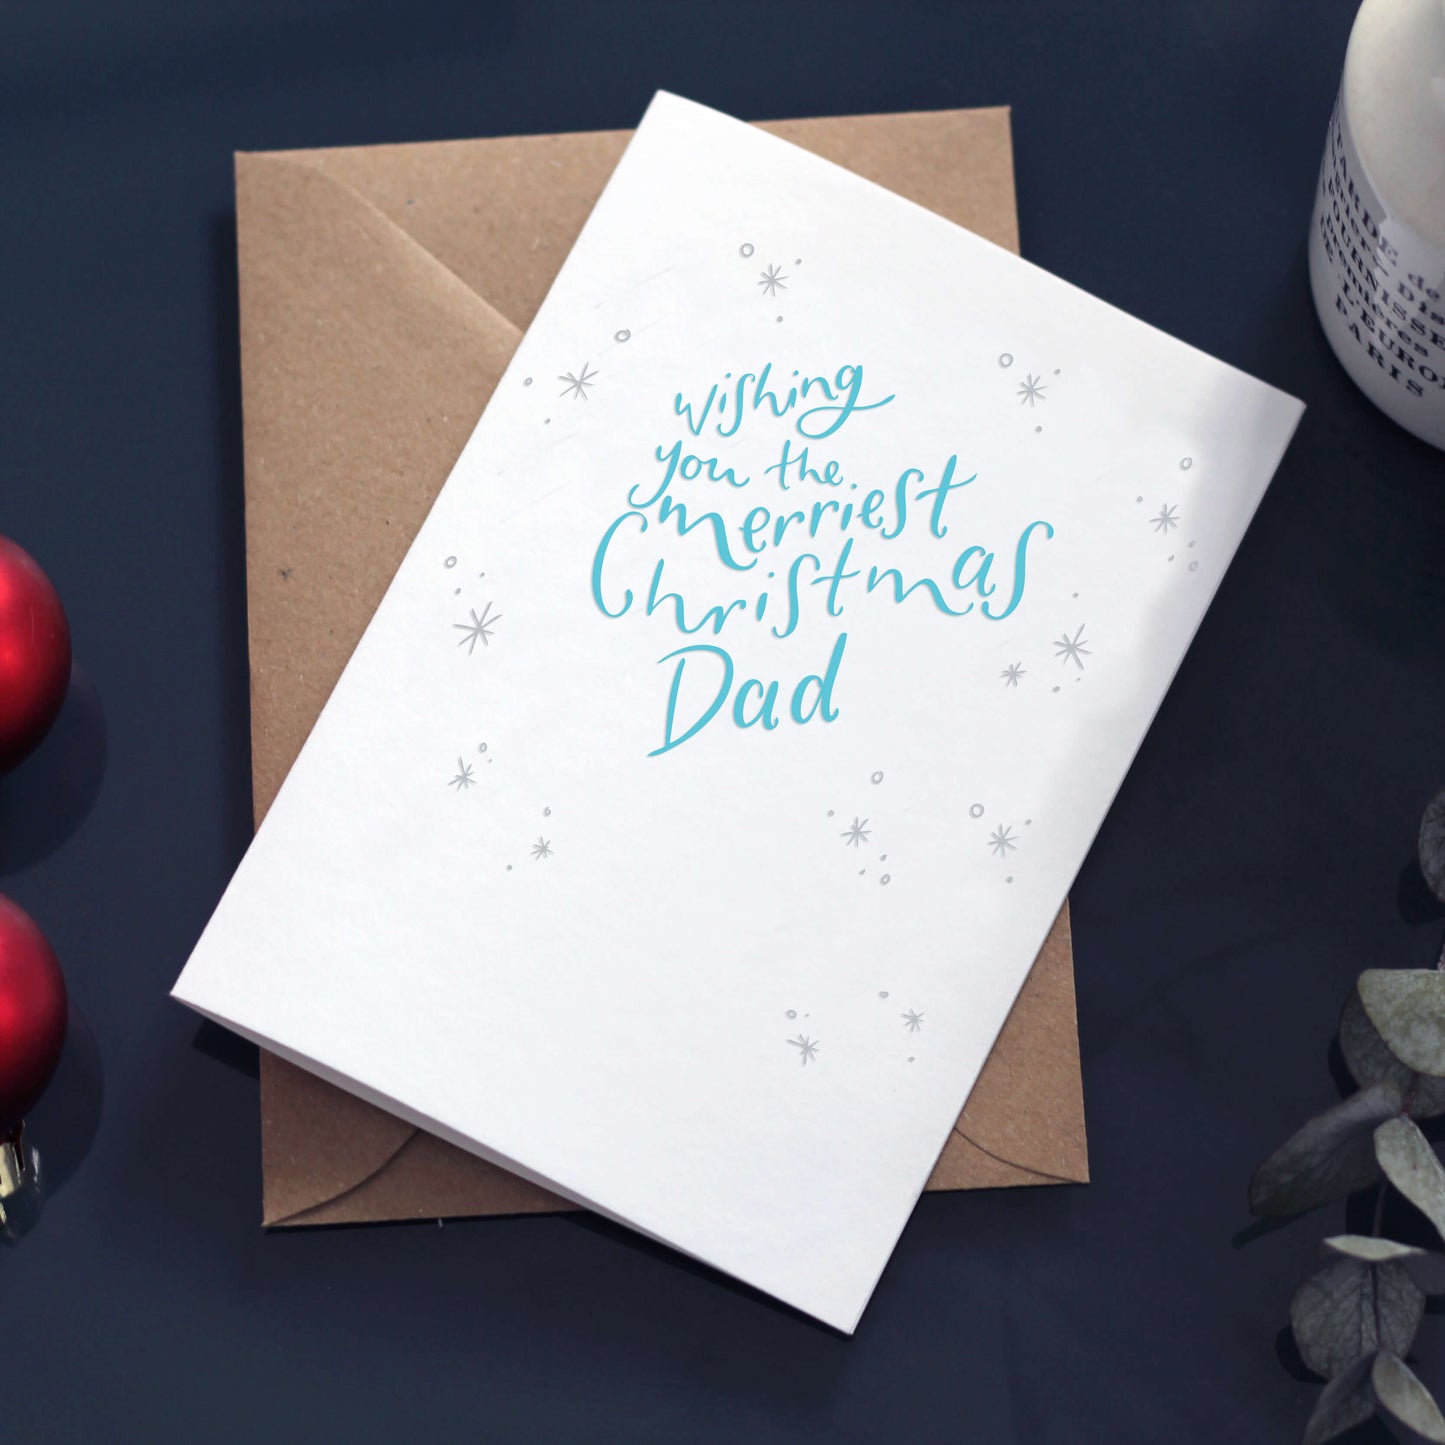 Dad Christmas Card - Drumgreenagh Design Store